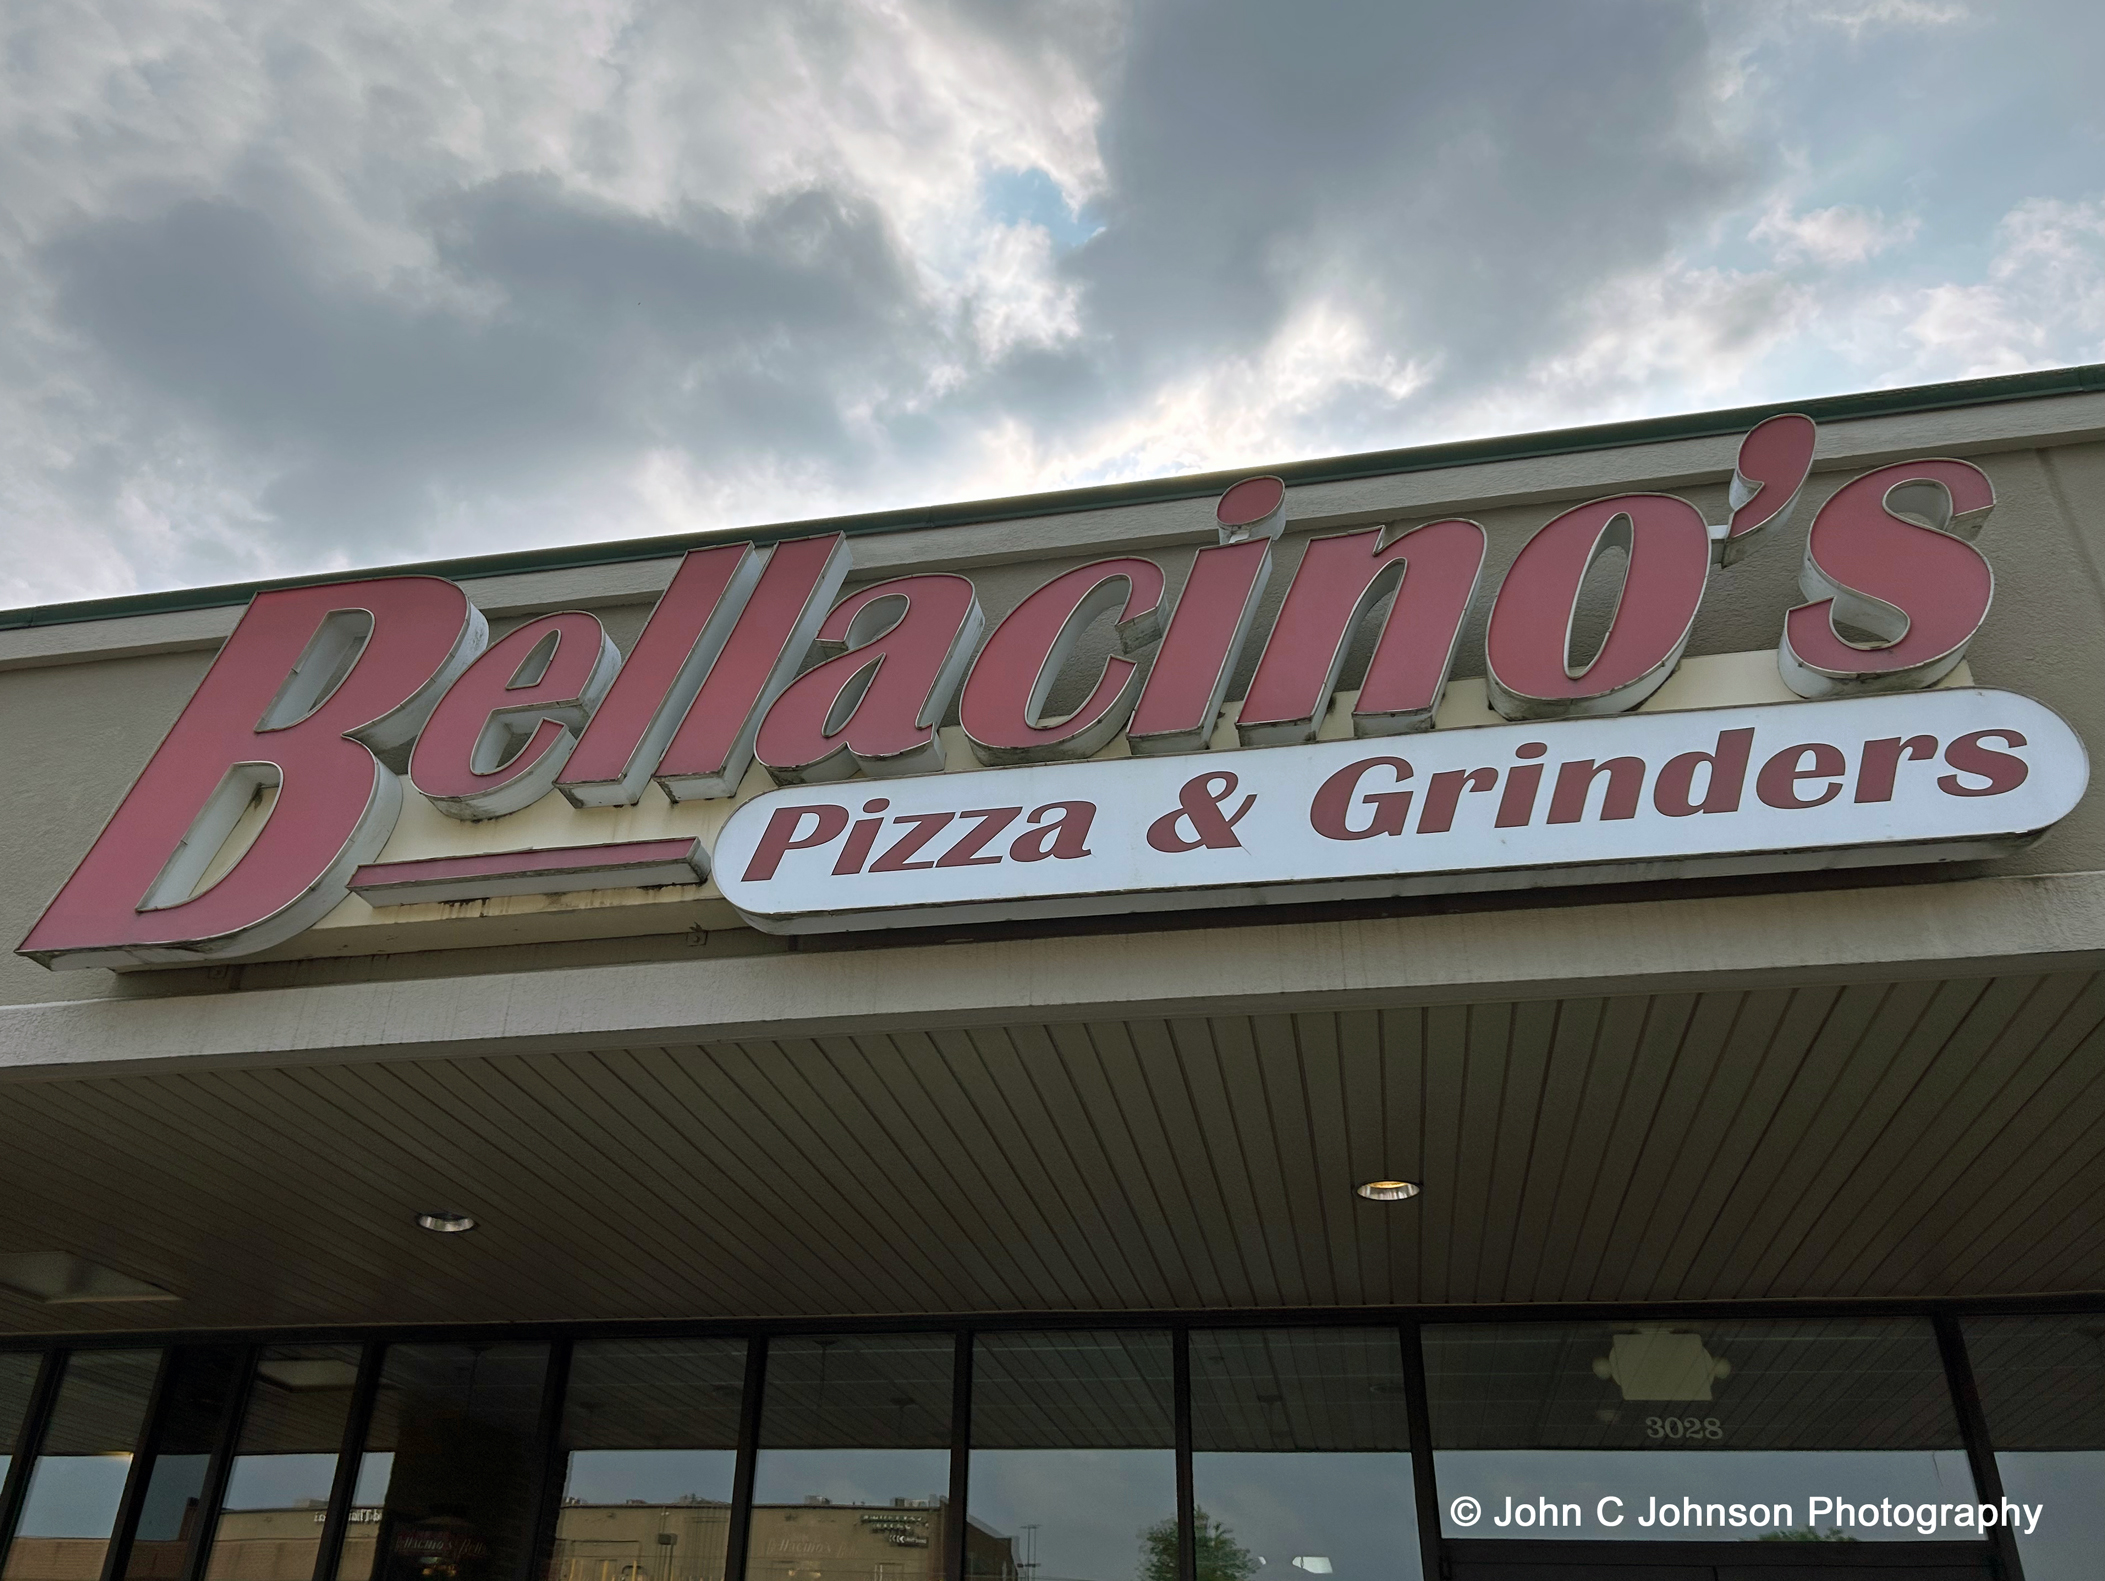 Bellacinos Pizza and Grinders Barboursville, West Virginia